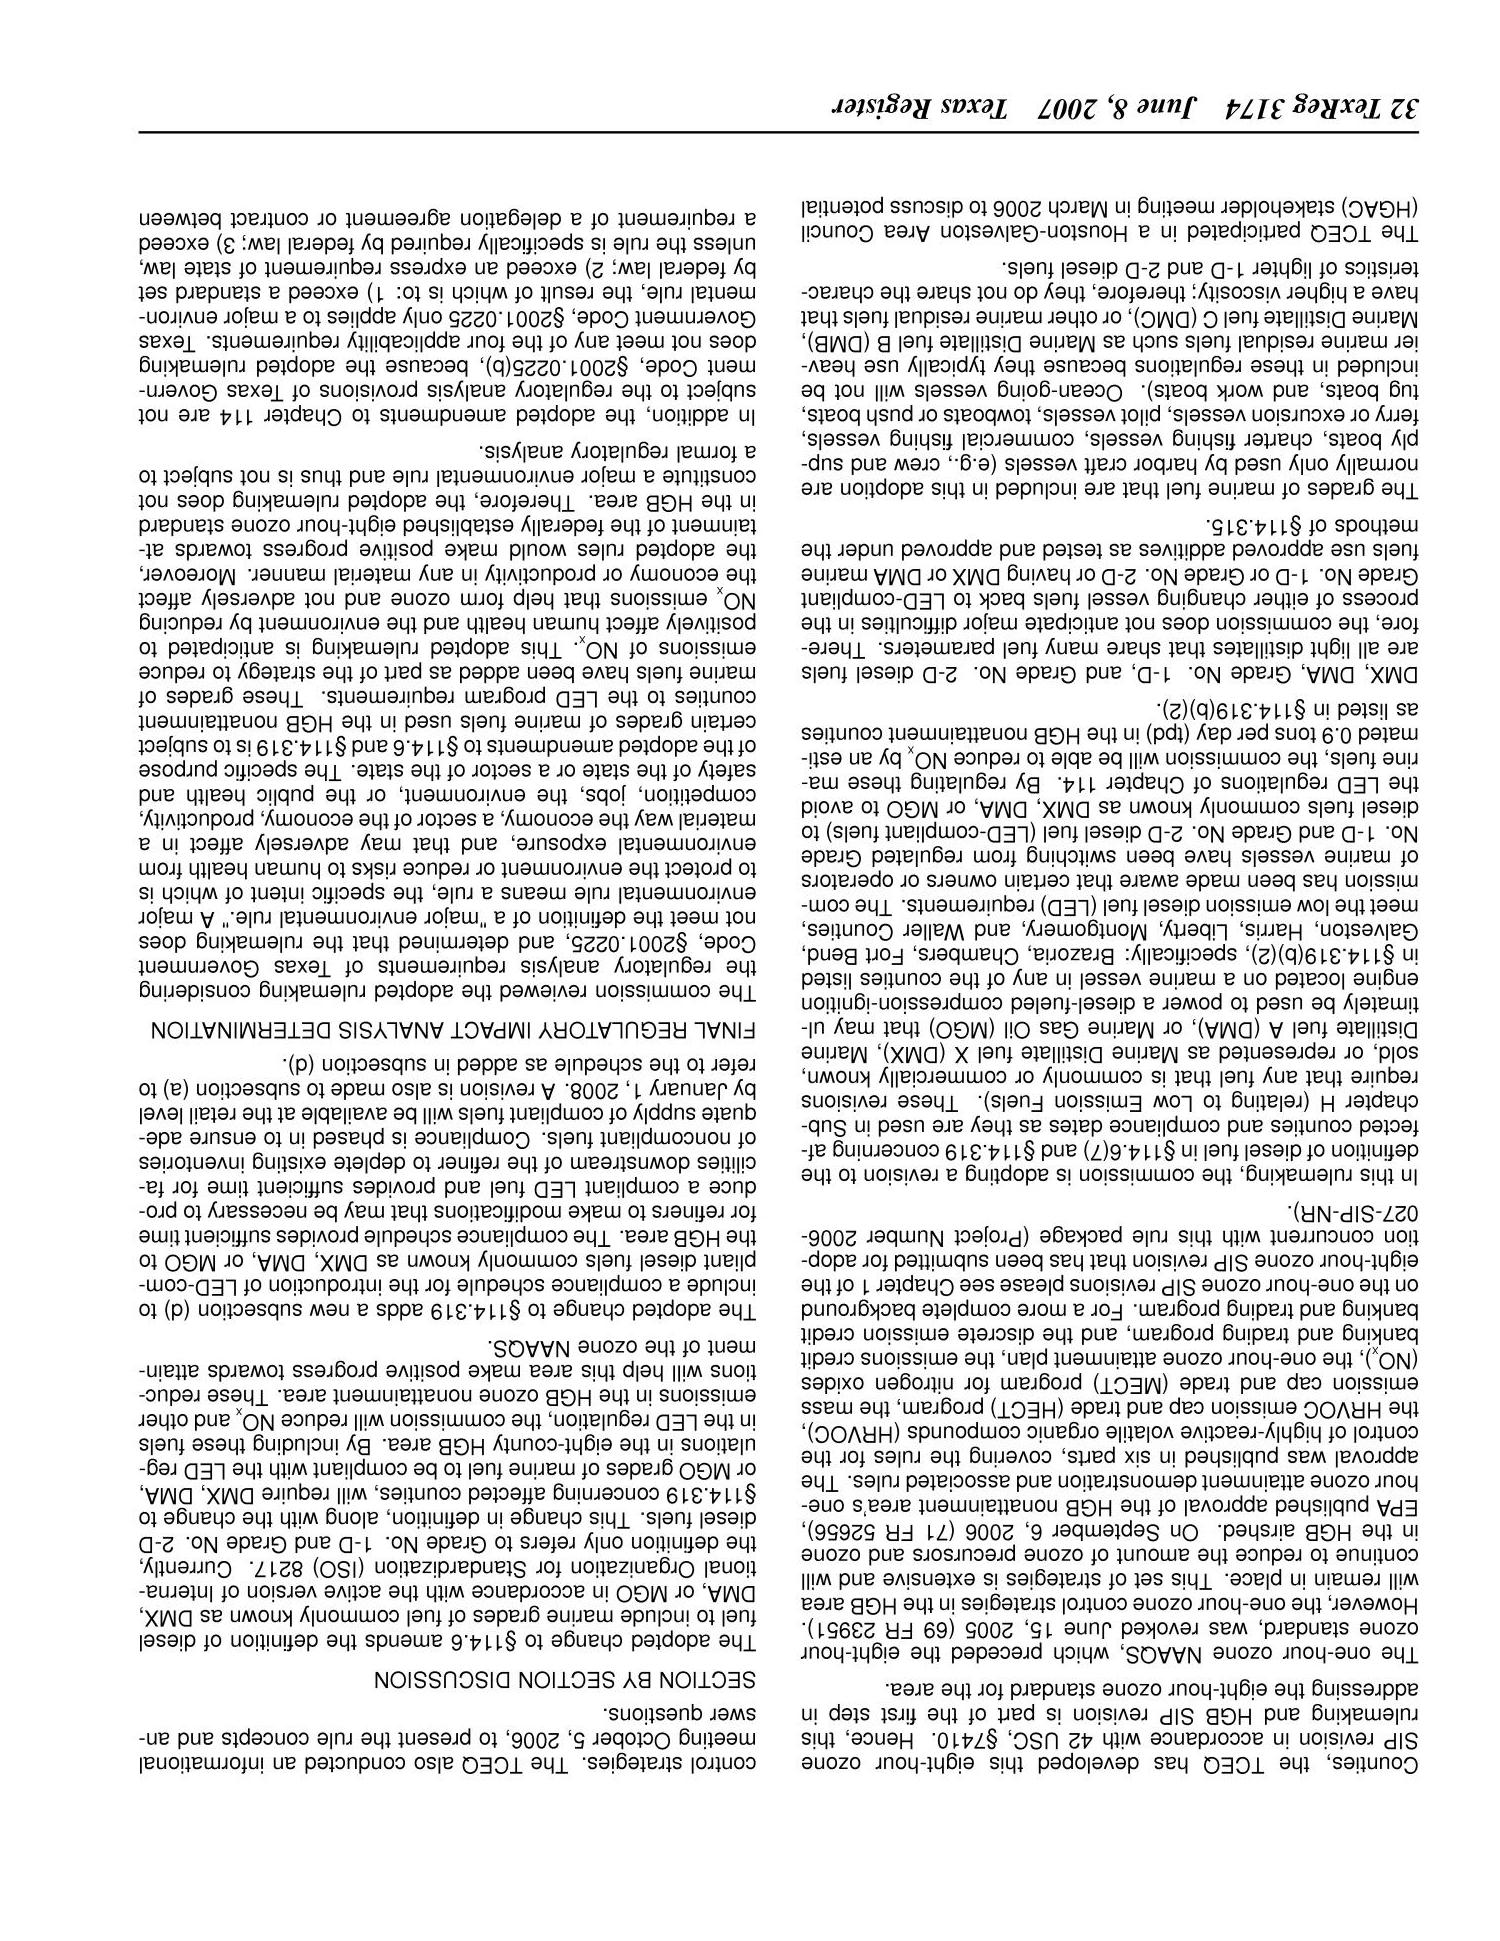 Texas Register, Volume 32, Number 23, Pages 3077-3422, June 8, 2007
                                                
                                                    3174
                                                